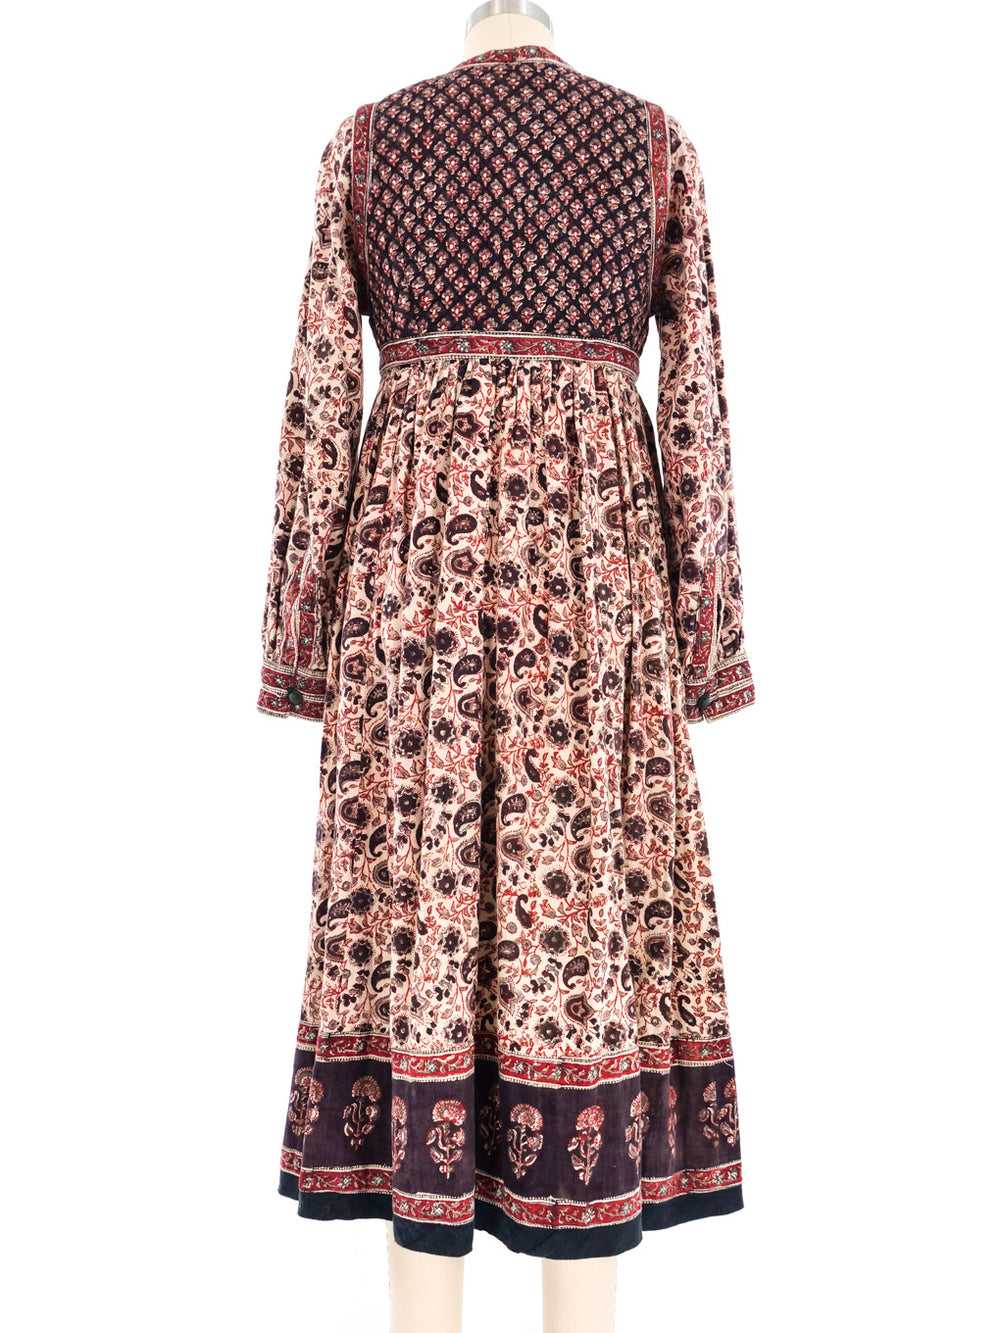 Block Printed Cotton Indian Dress - image 4